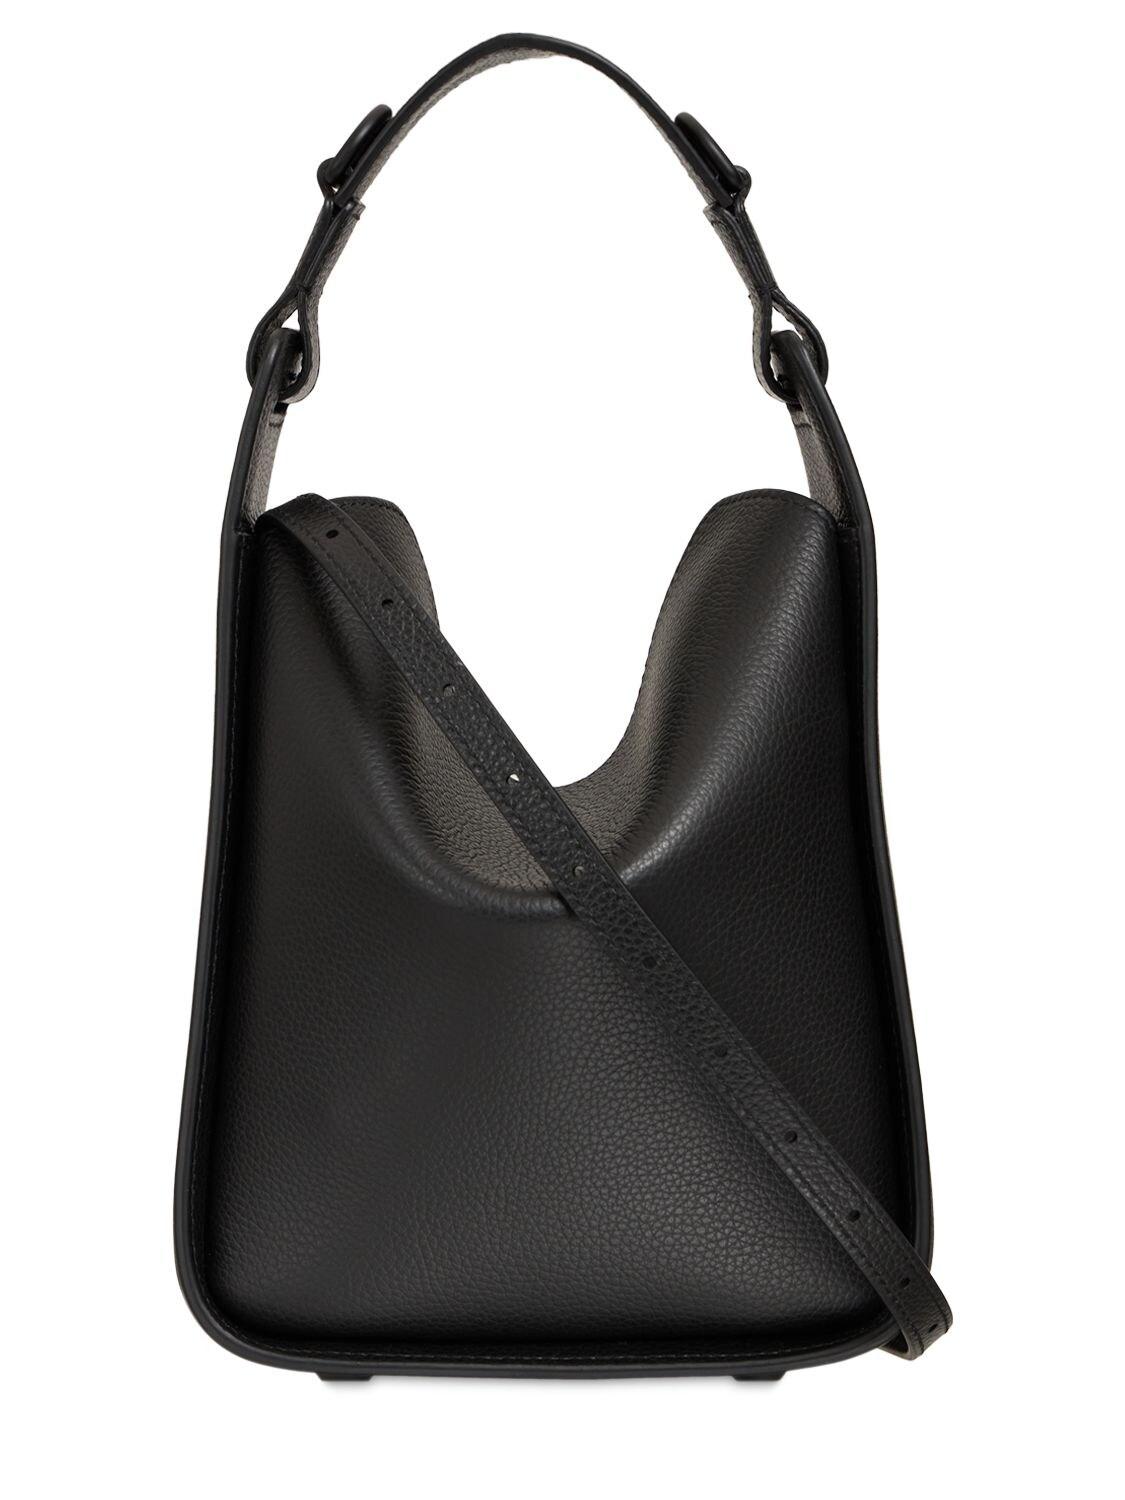 Balenciaga Xs Tool 2.0 Leather Tote Bag in Black | Lyst